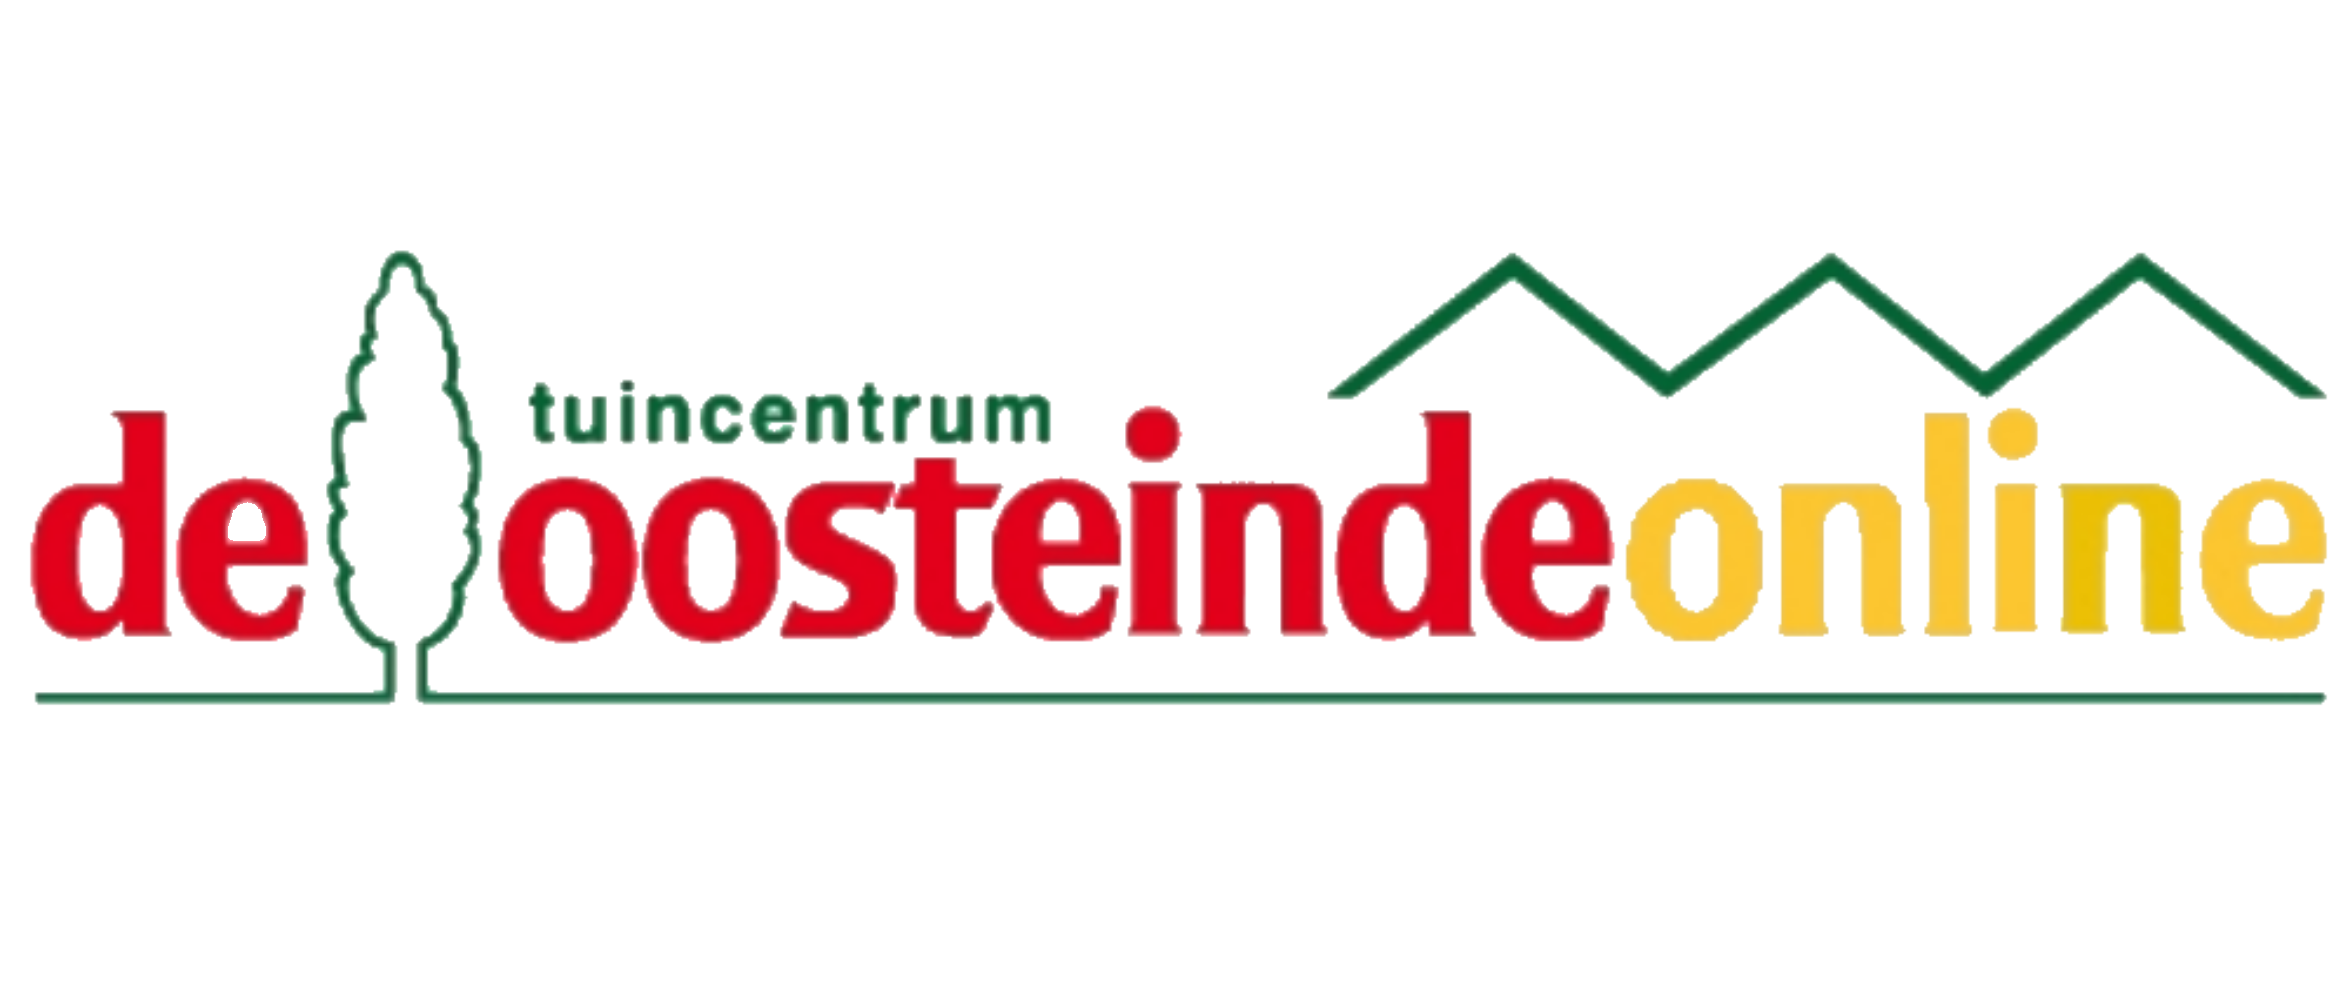 Deoosteindeonline.nl